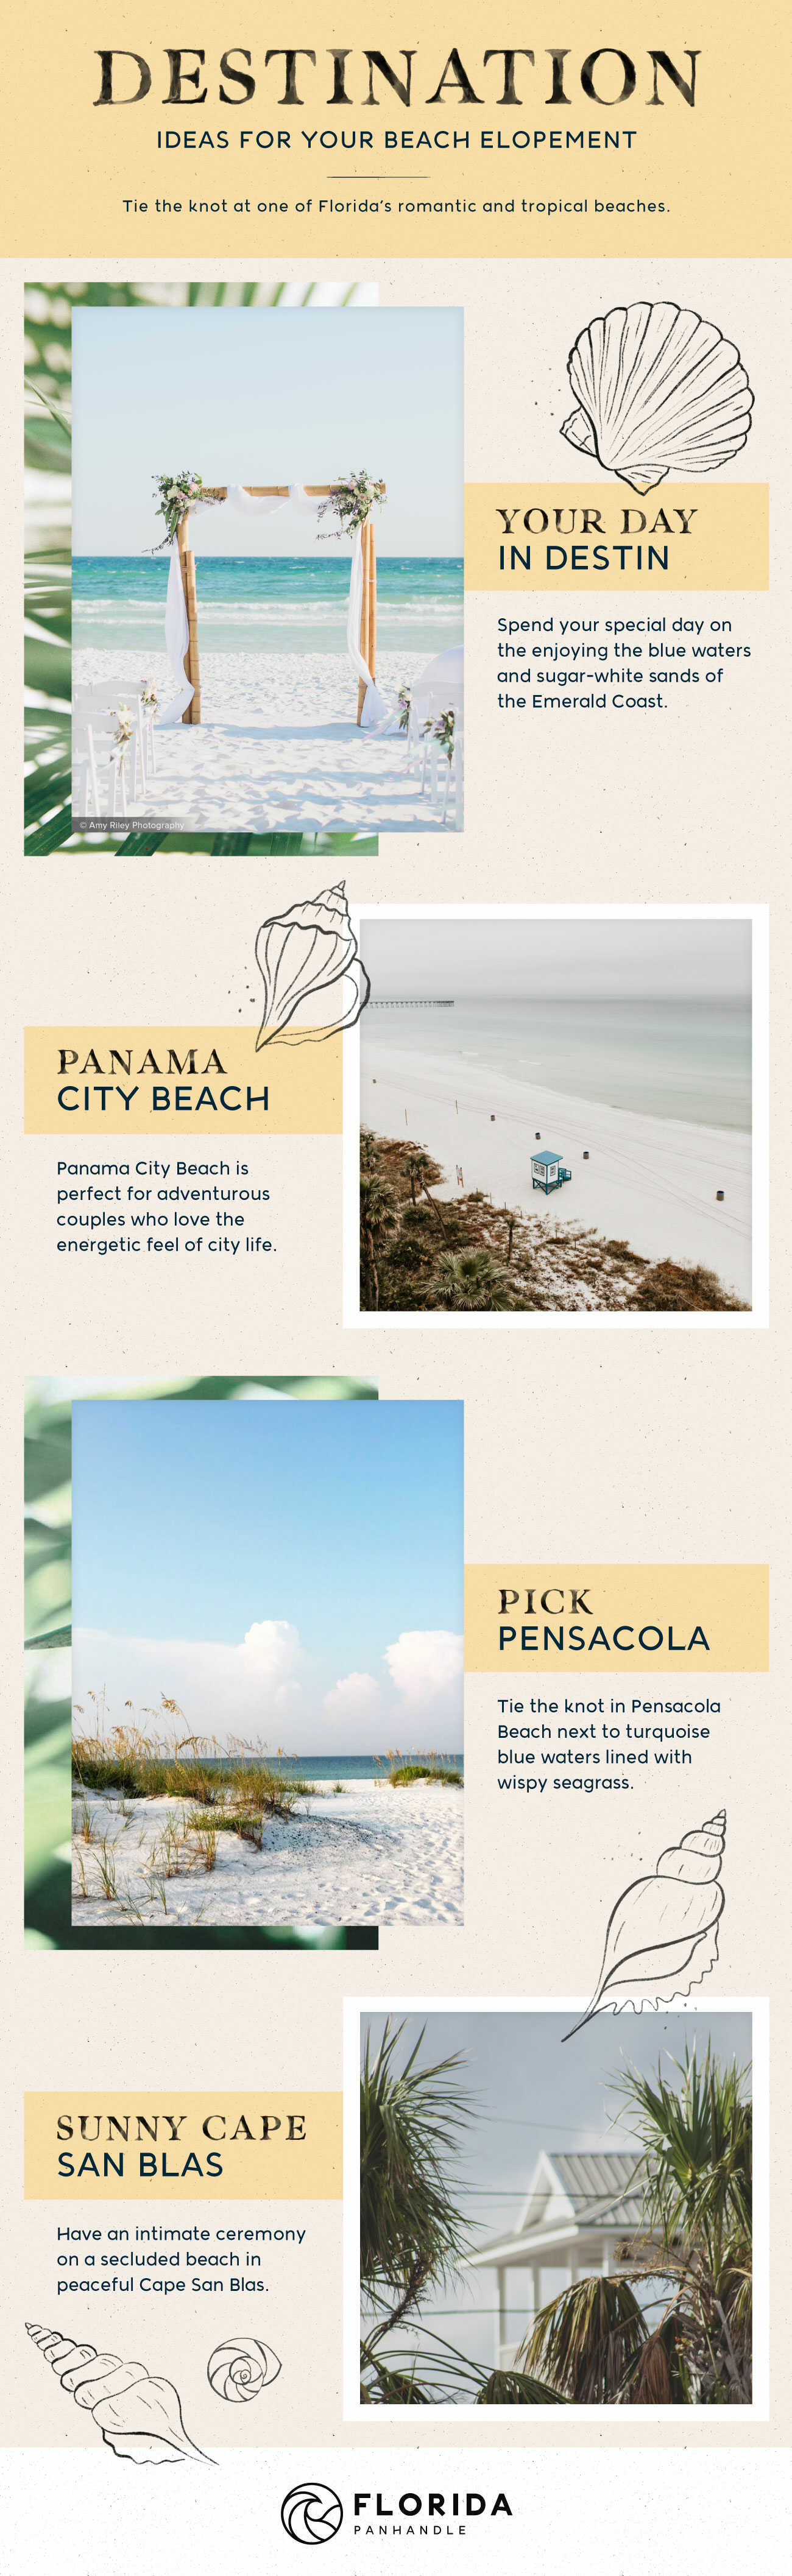 beach elopement locations in the Florida Panhandle - Destin, Panama City Beach, Pensacola, and Cape San Blas